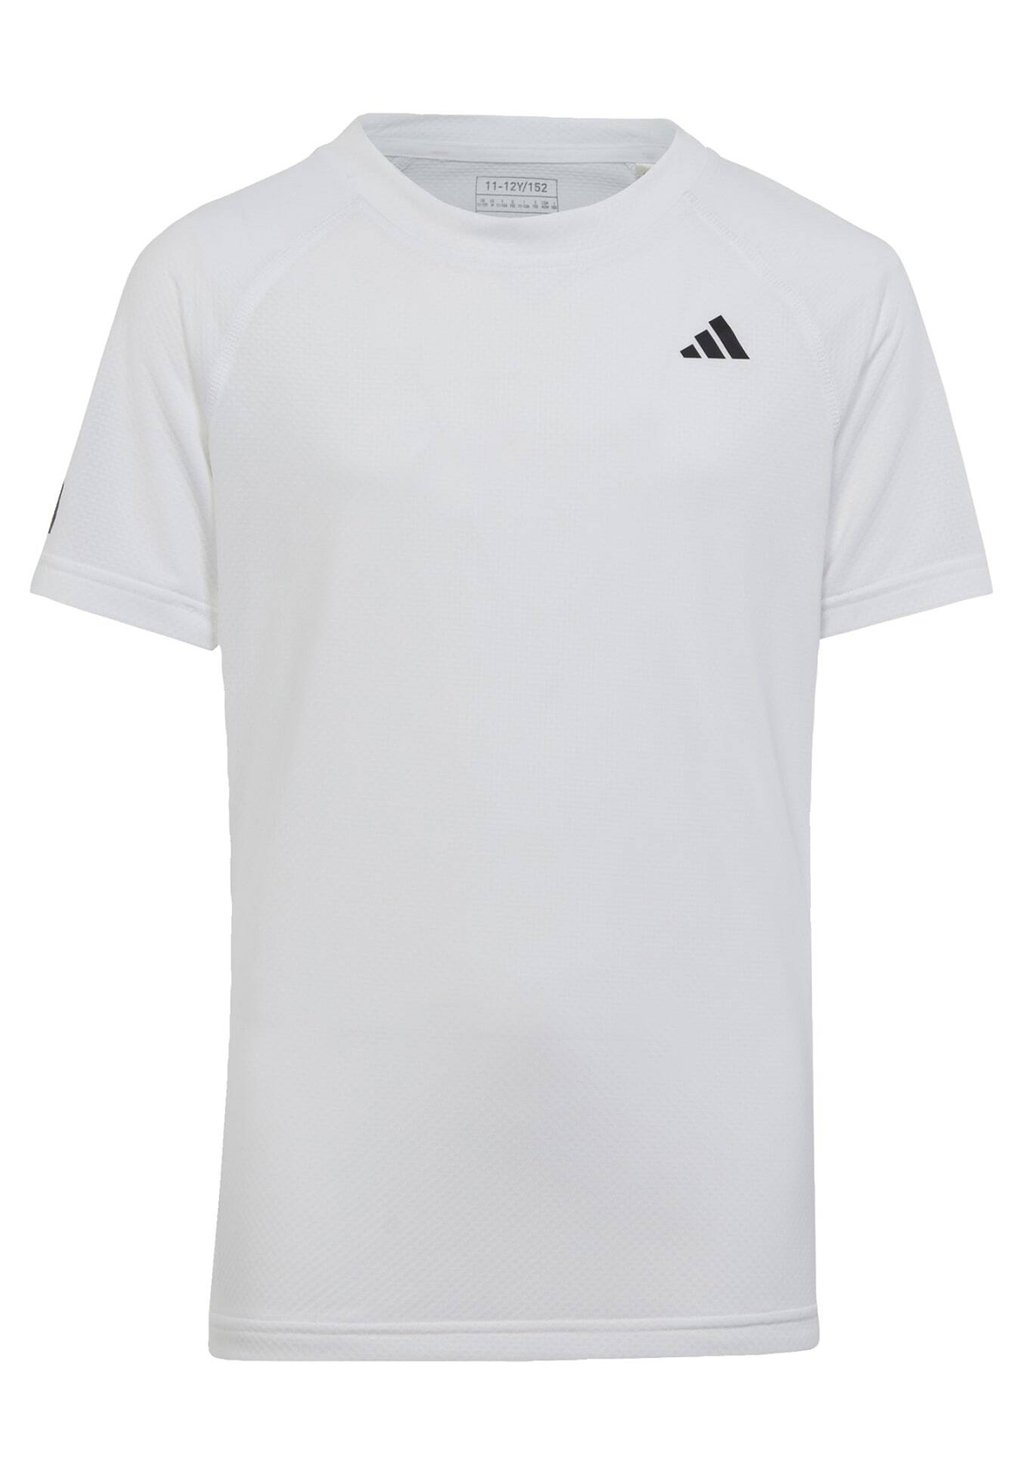 Спортивная футболка Club Tee Adidas, белый